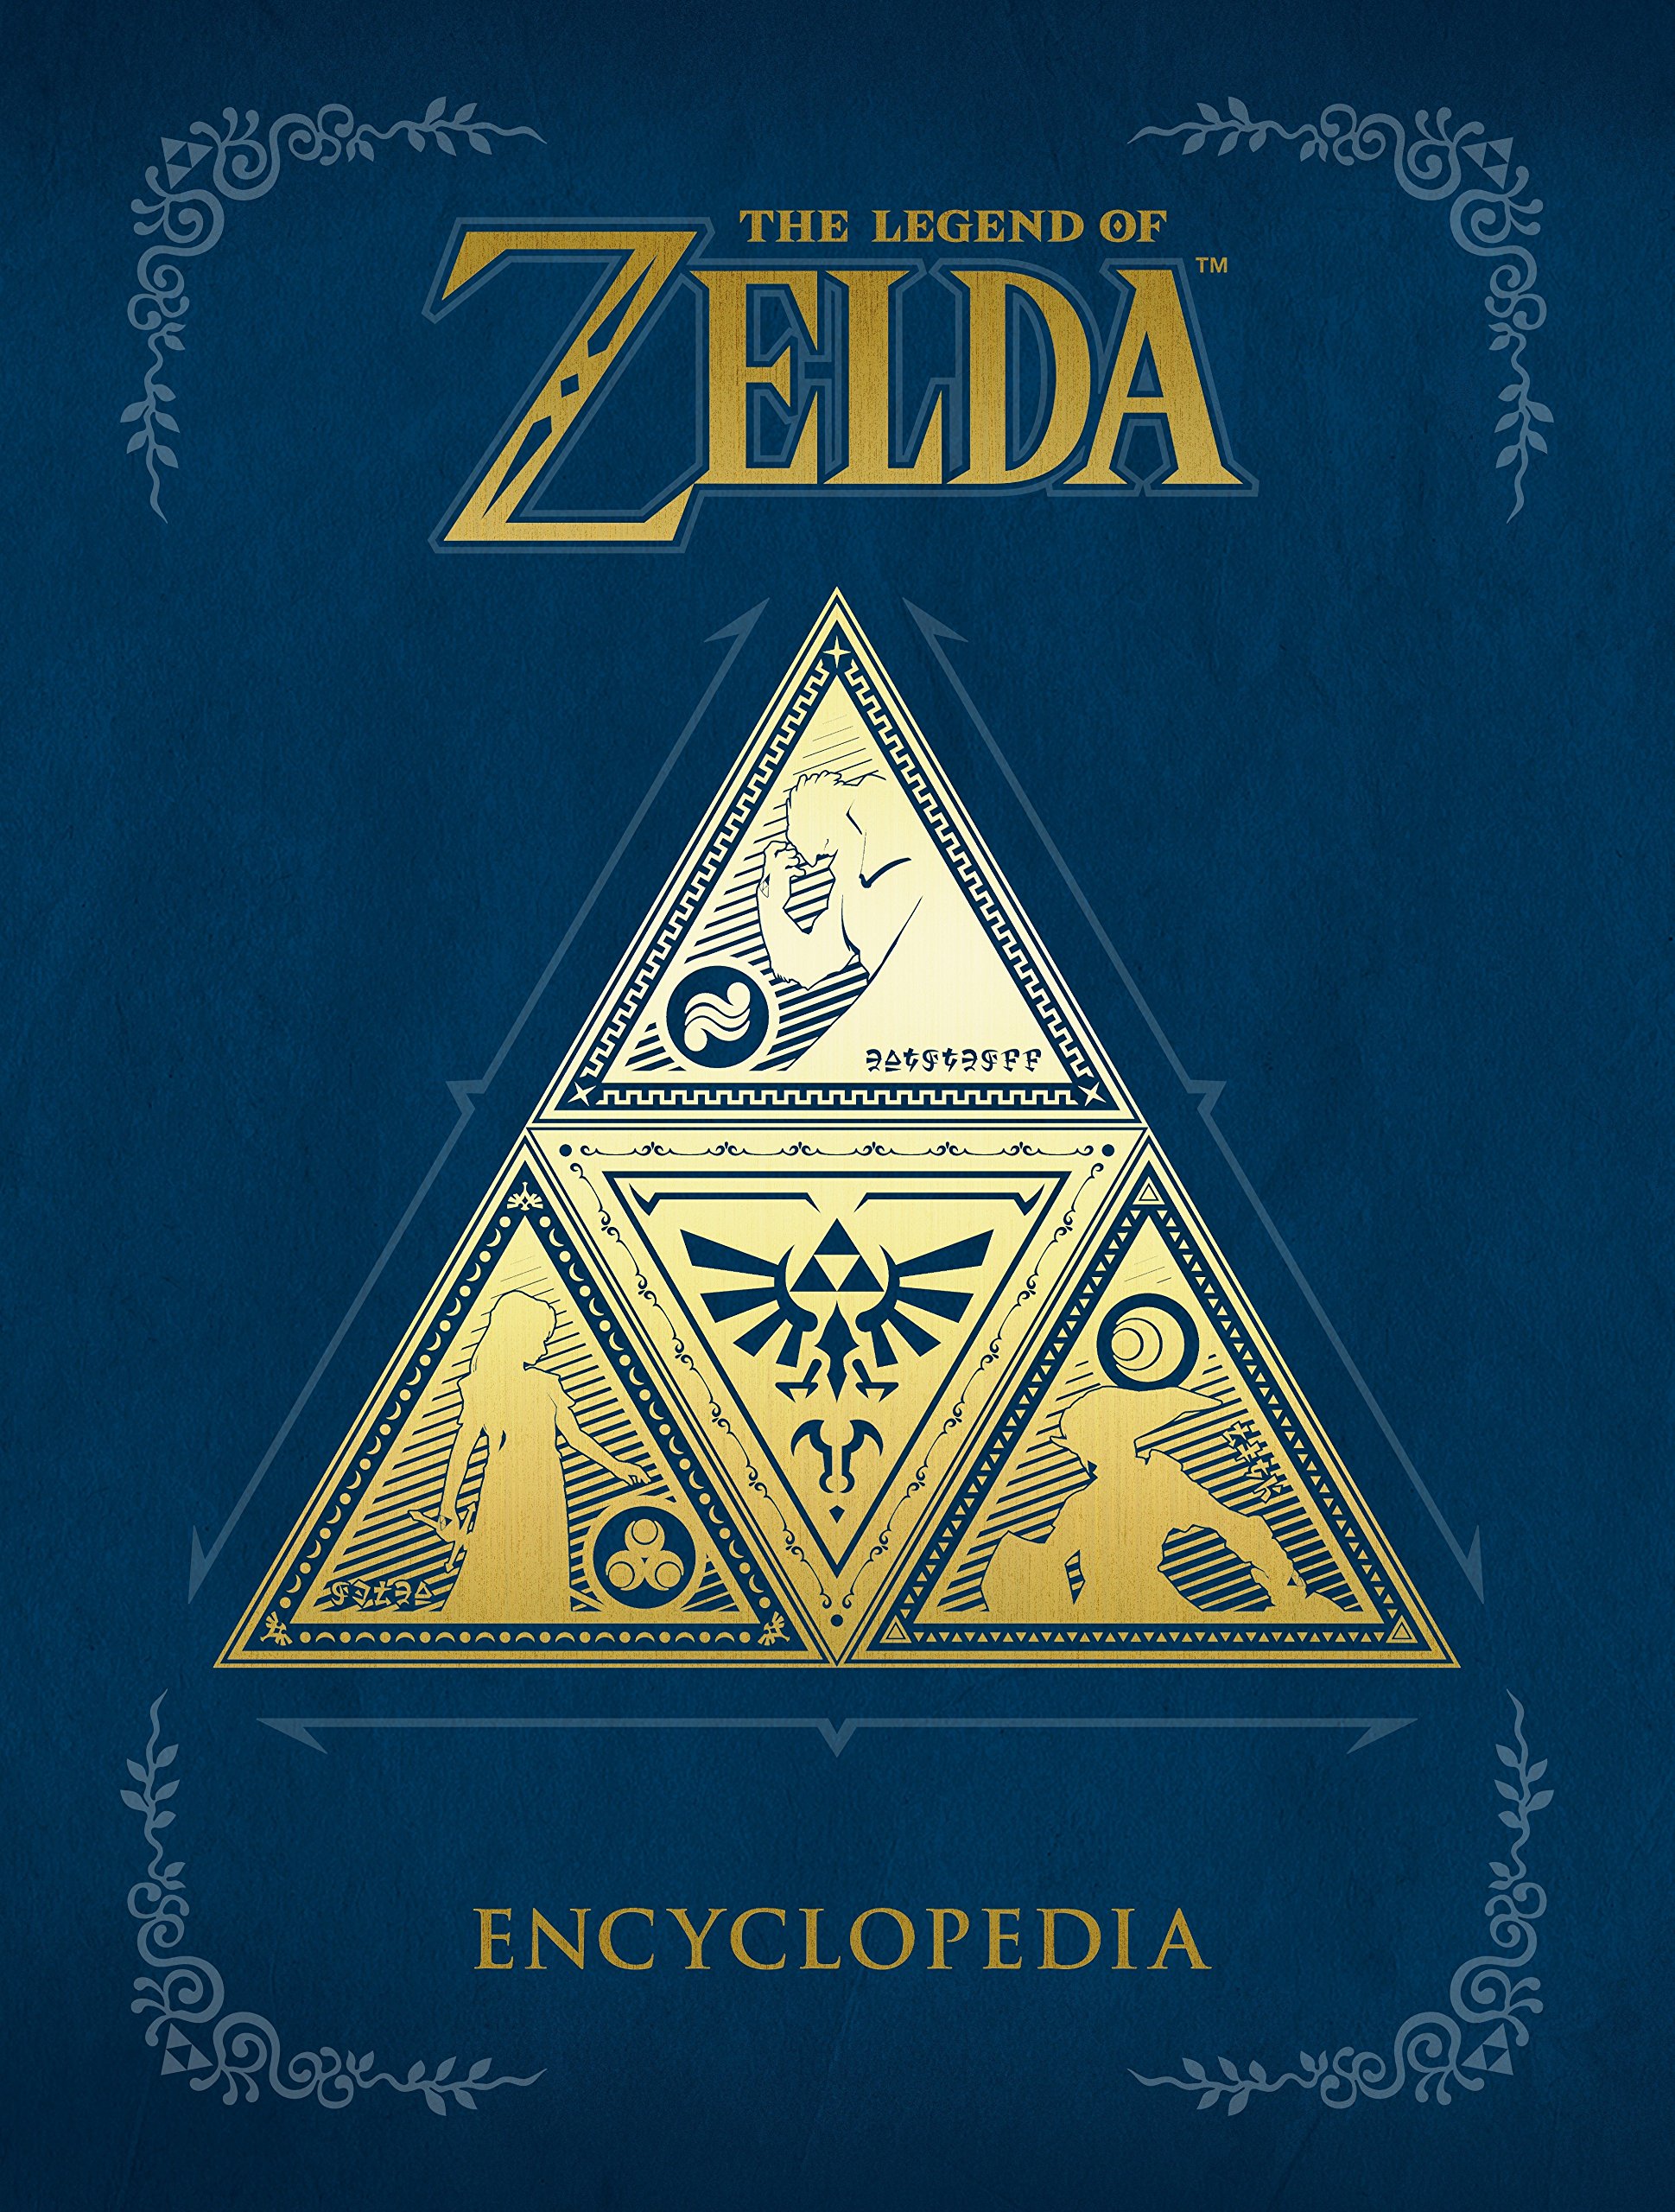 Zelda-encyclopedia-cover.jpg